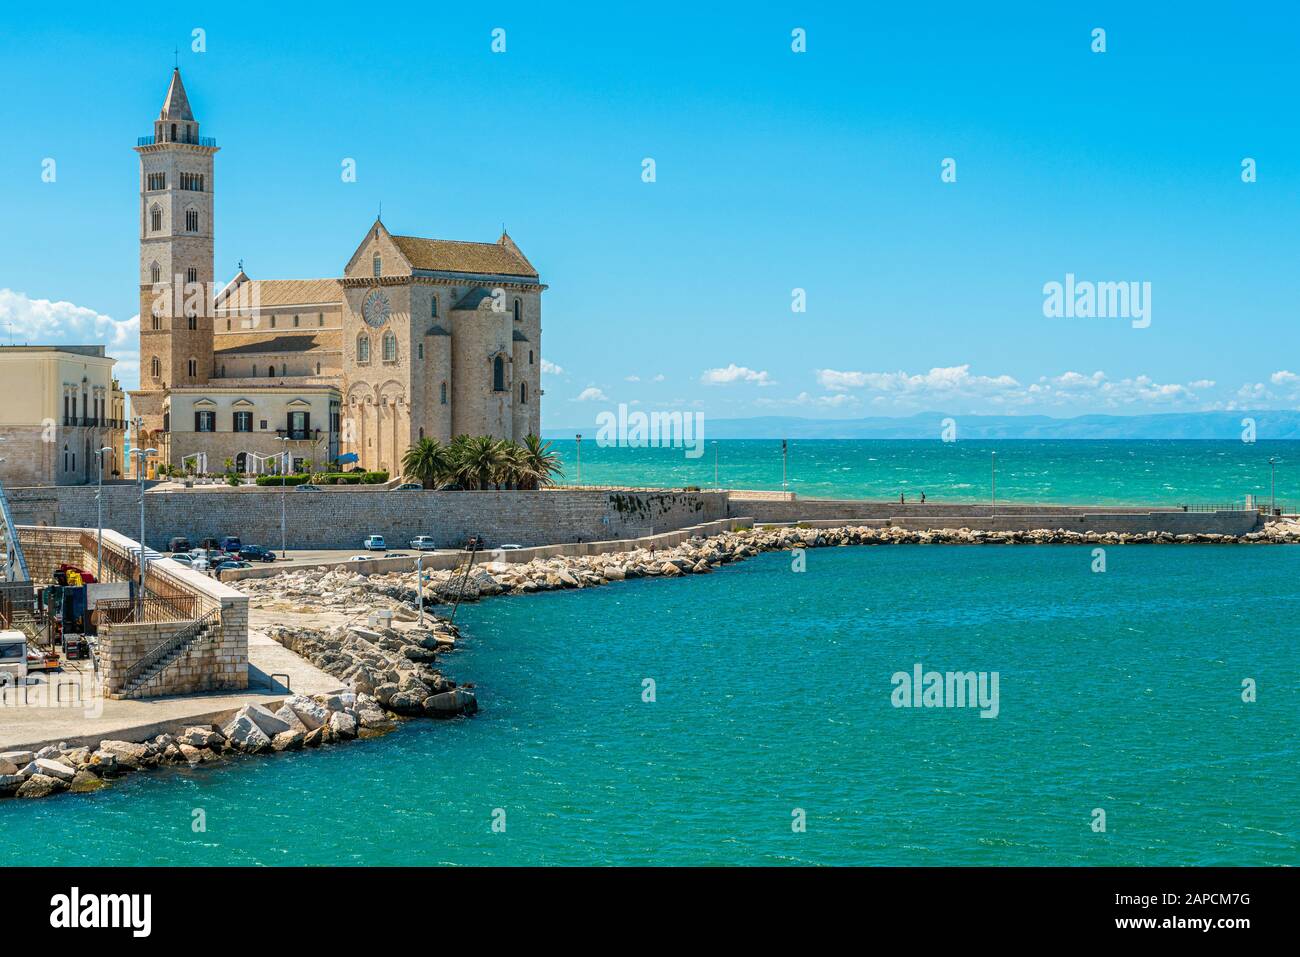 Trani waterfront avec la superbe cathédrale. Province de Barletta Andria Trani, Puglia (Pouilles), Italie. Banque D'Images